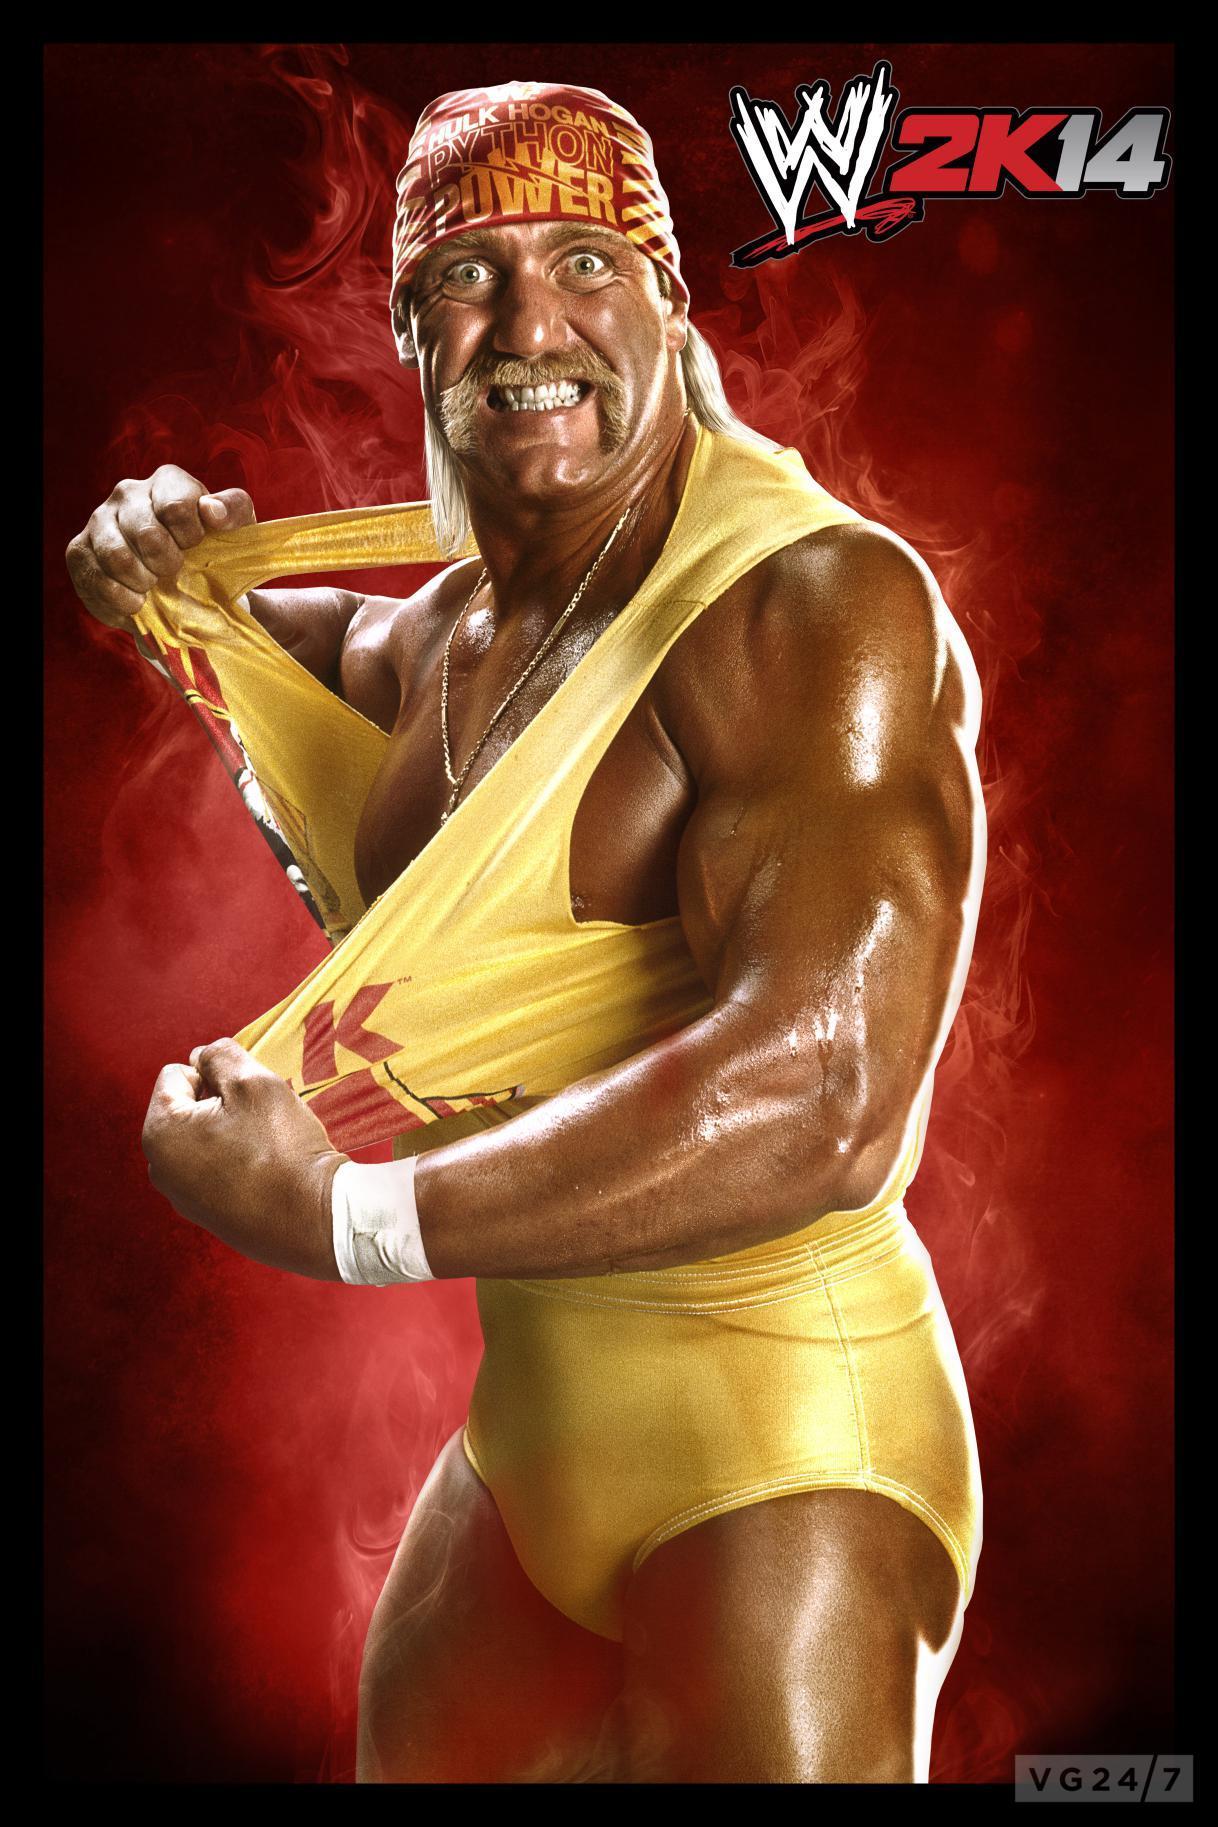 WWE image hulk hogan HD wallpaper and background photo